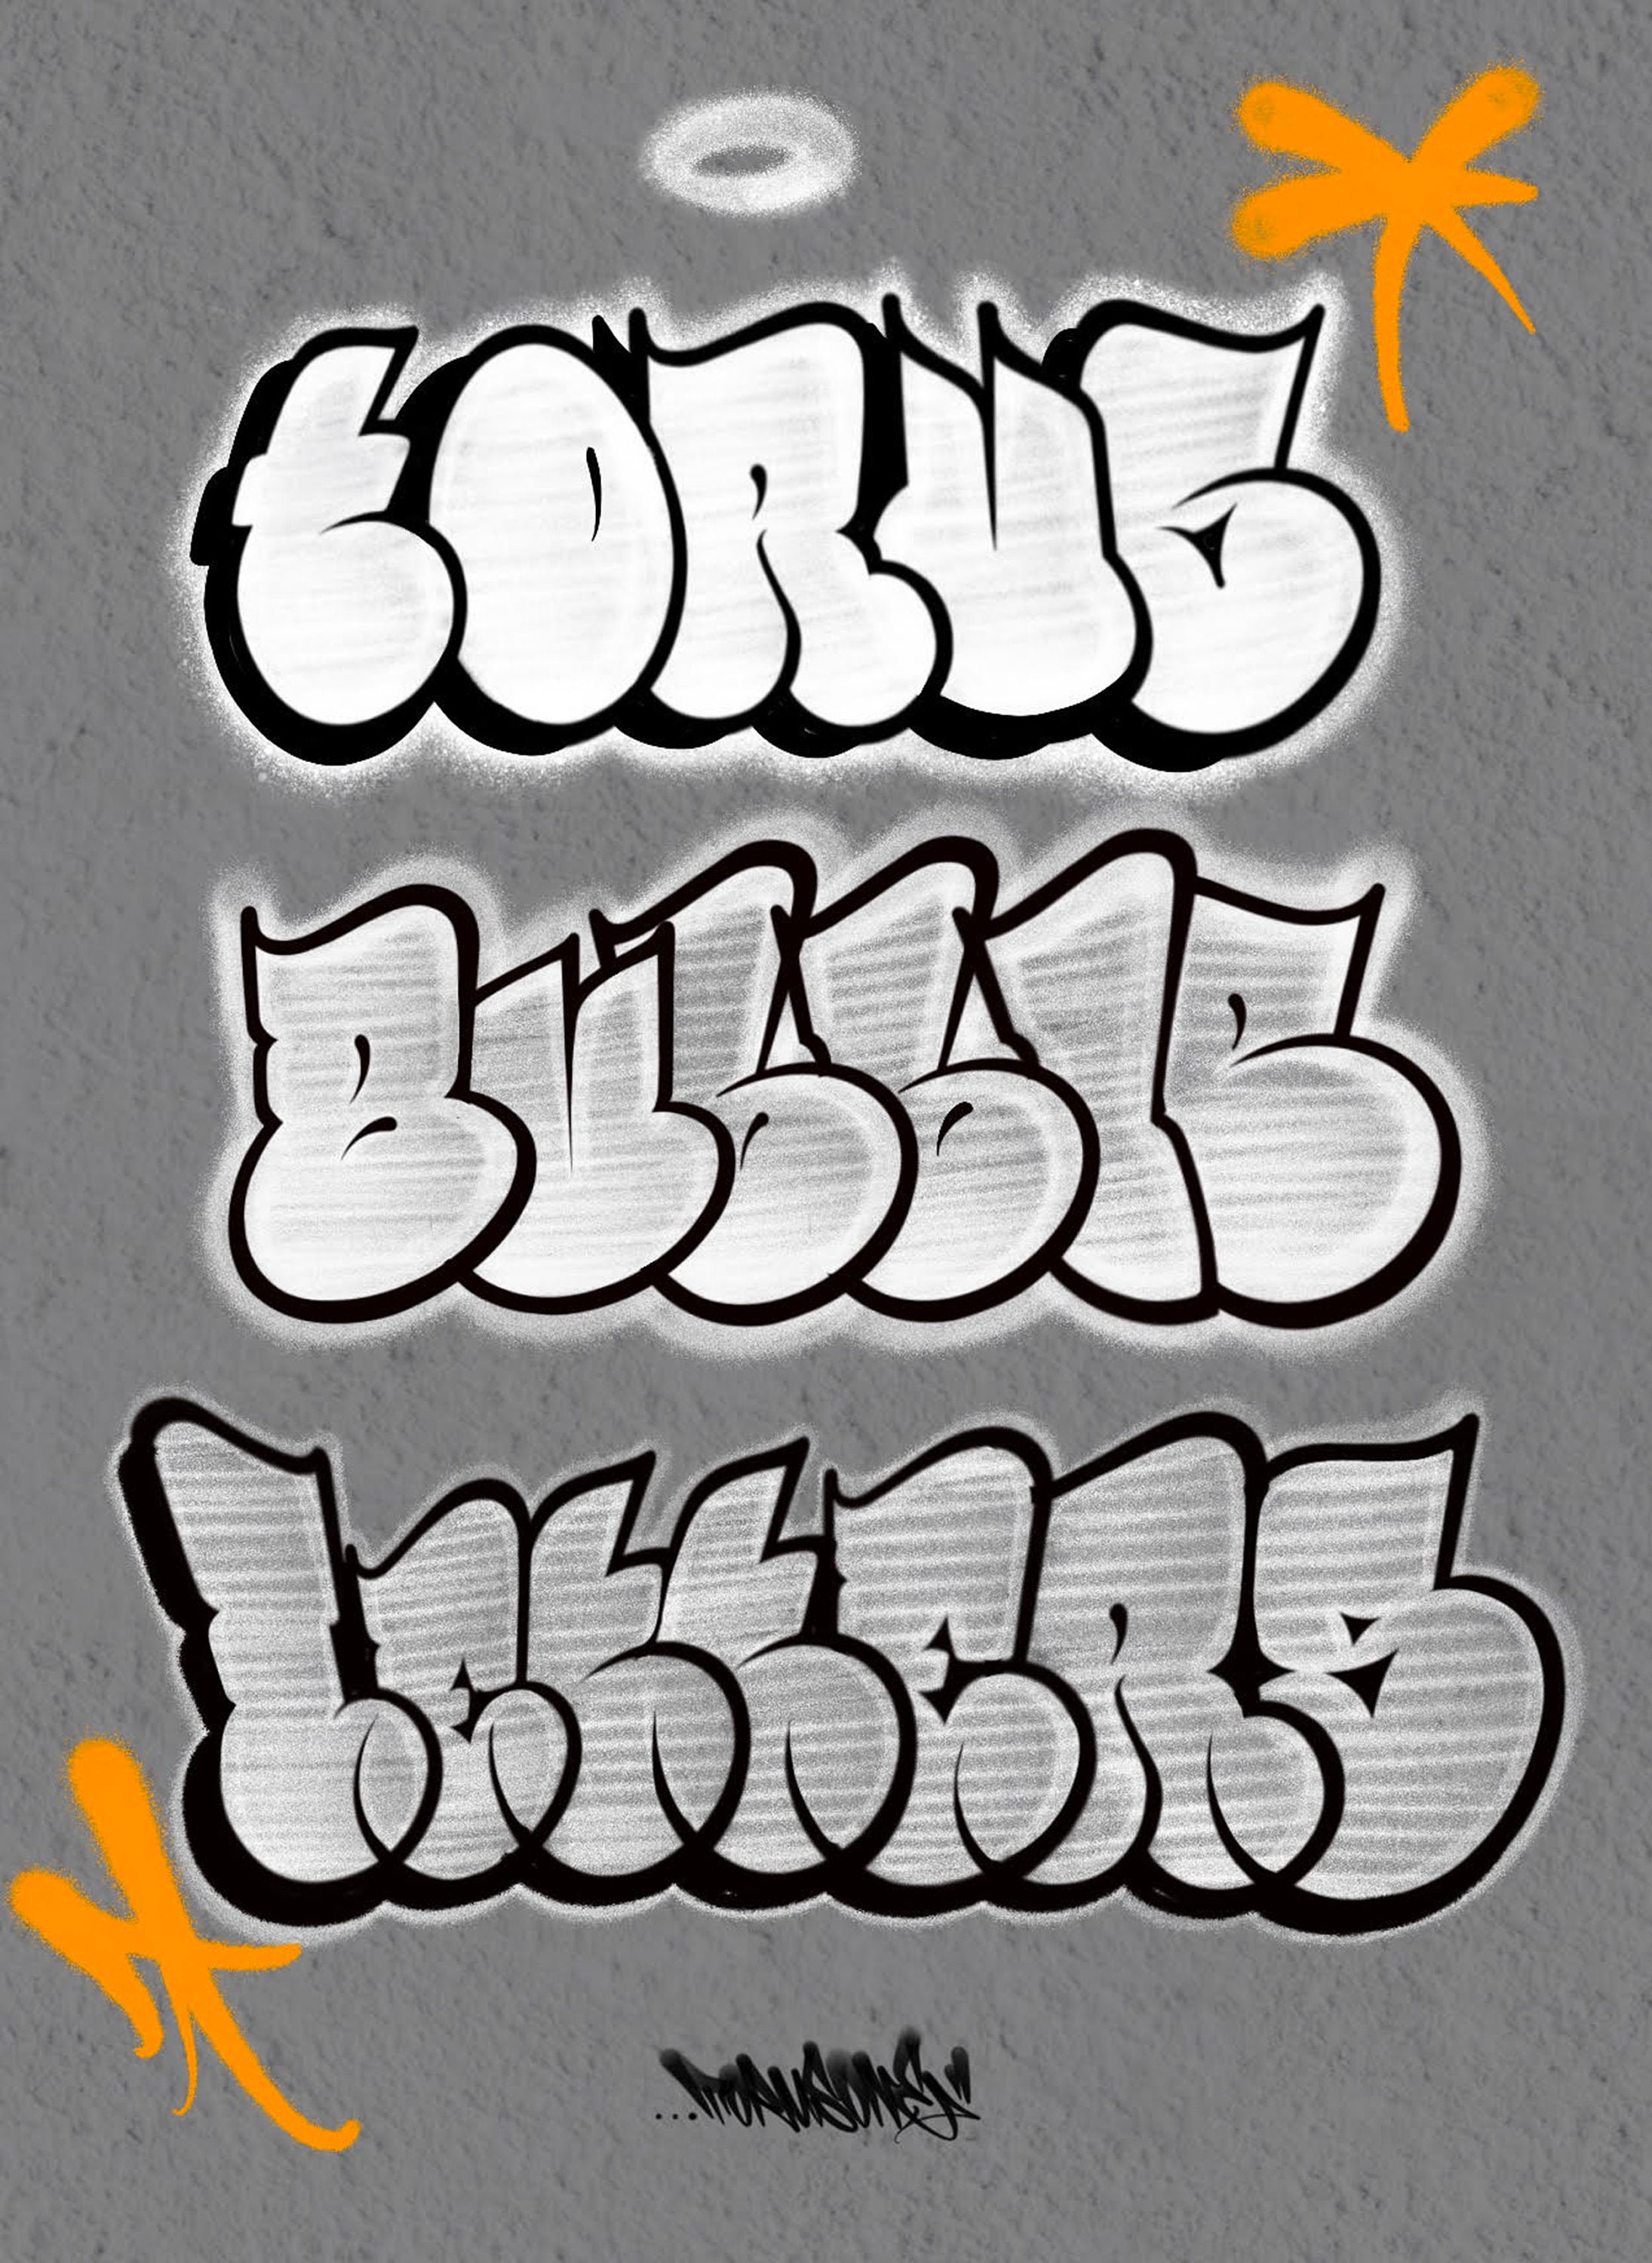 graffiti alphabet throw up letters